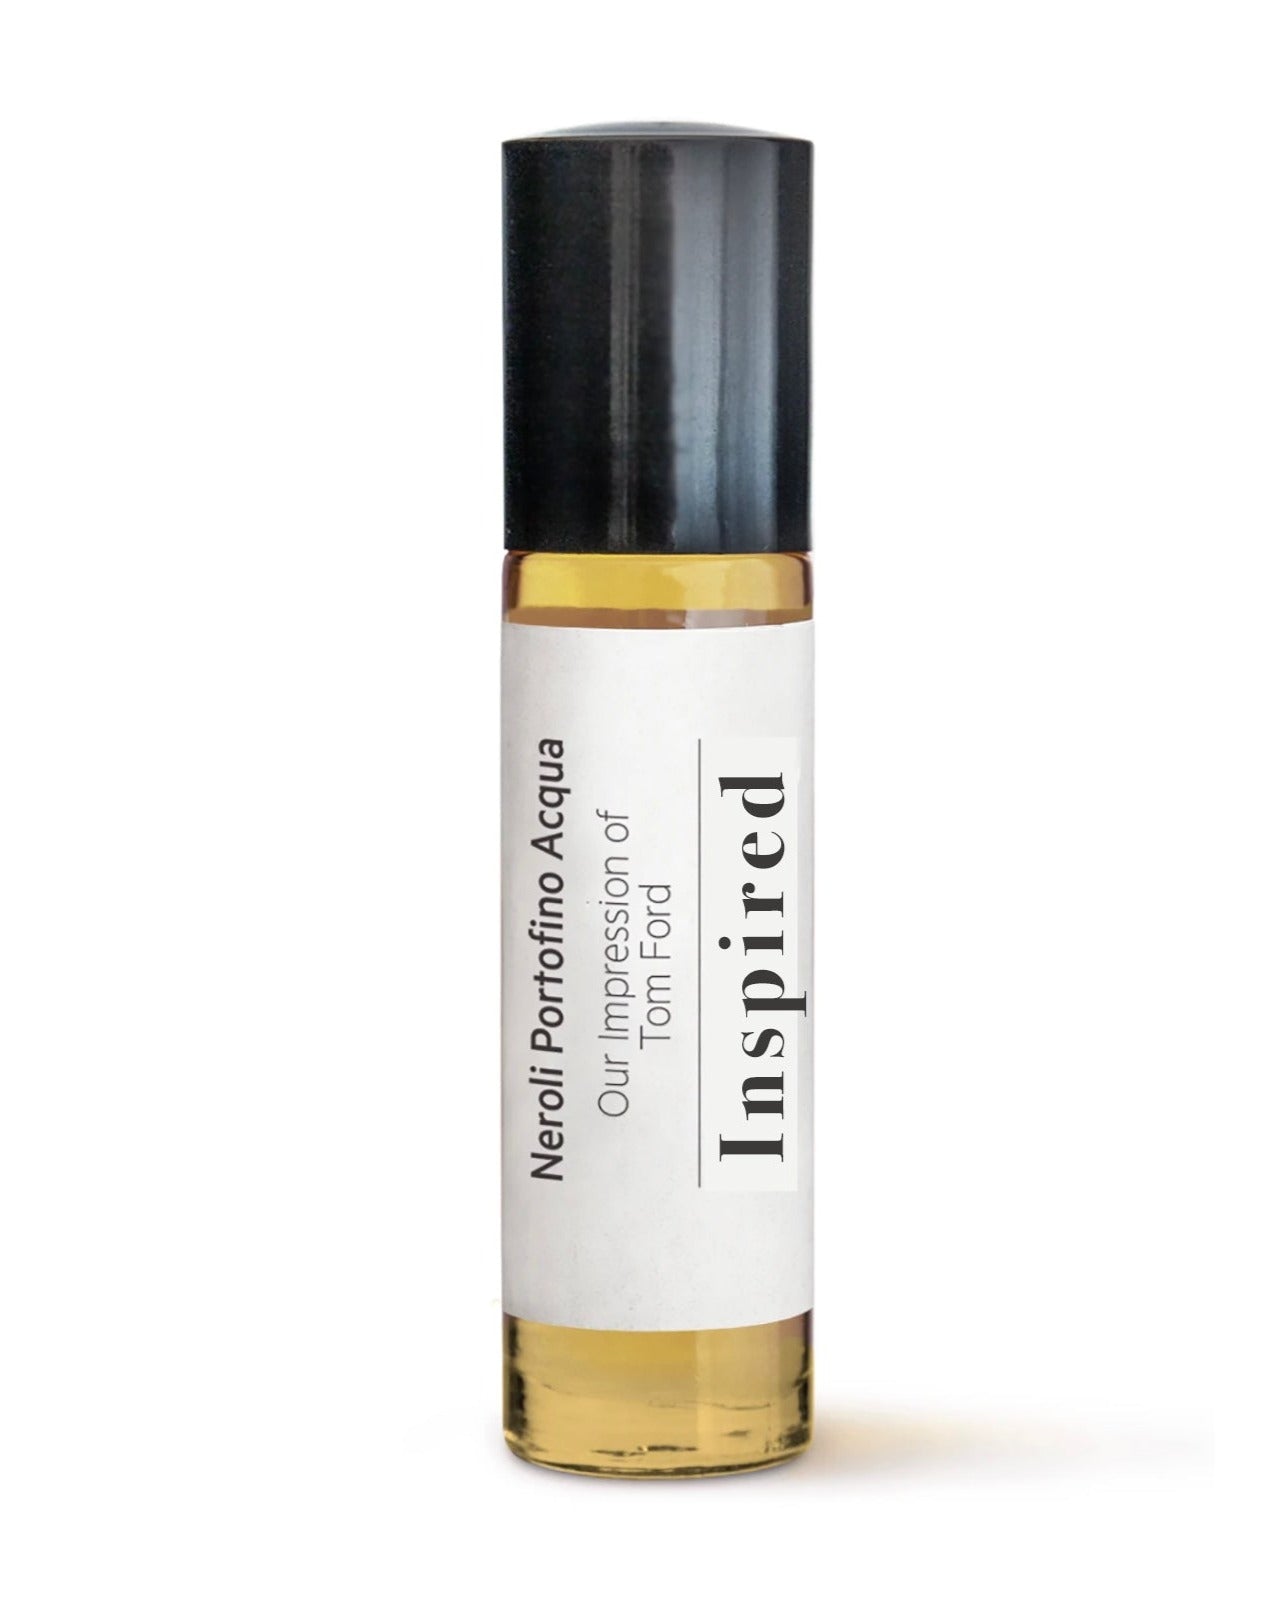 Luxury Long Lasting Perfume Oil Neroli Portofino Inspired By Tom Ford. Vegan Friendly And Cruelty Free.